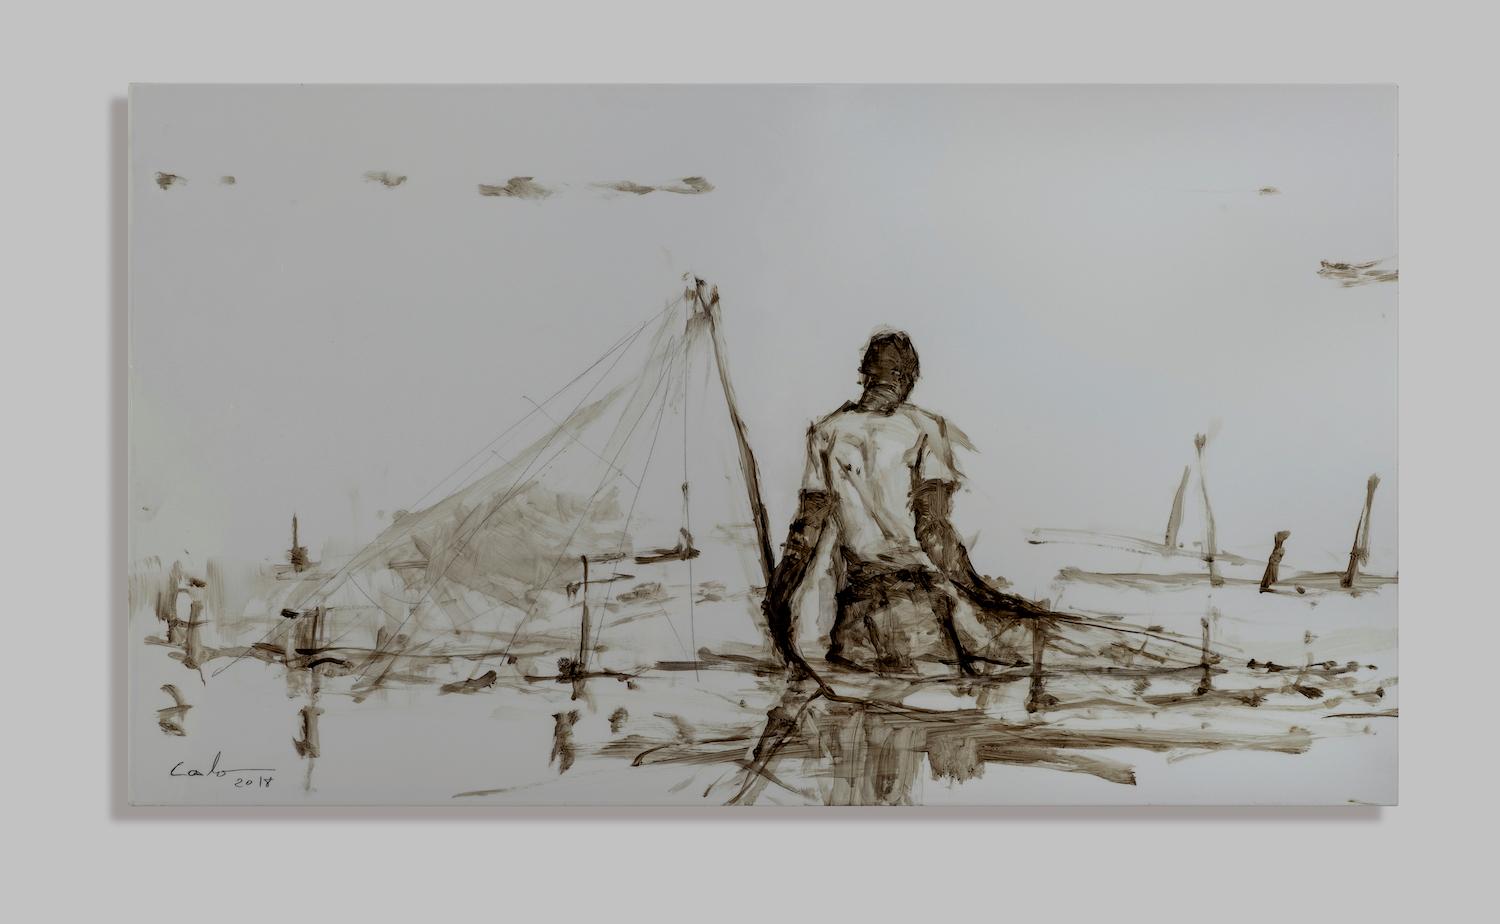 Calo Carratalá Portrait Painting - Fisherman V, Tanzania series - Acrylic on iron painting